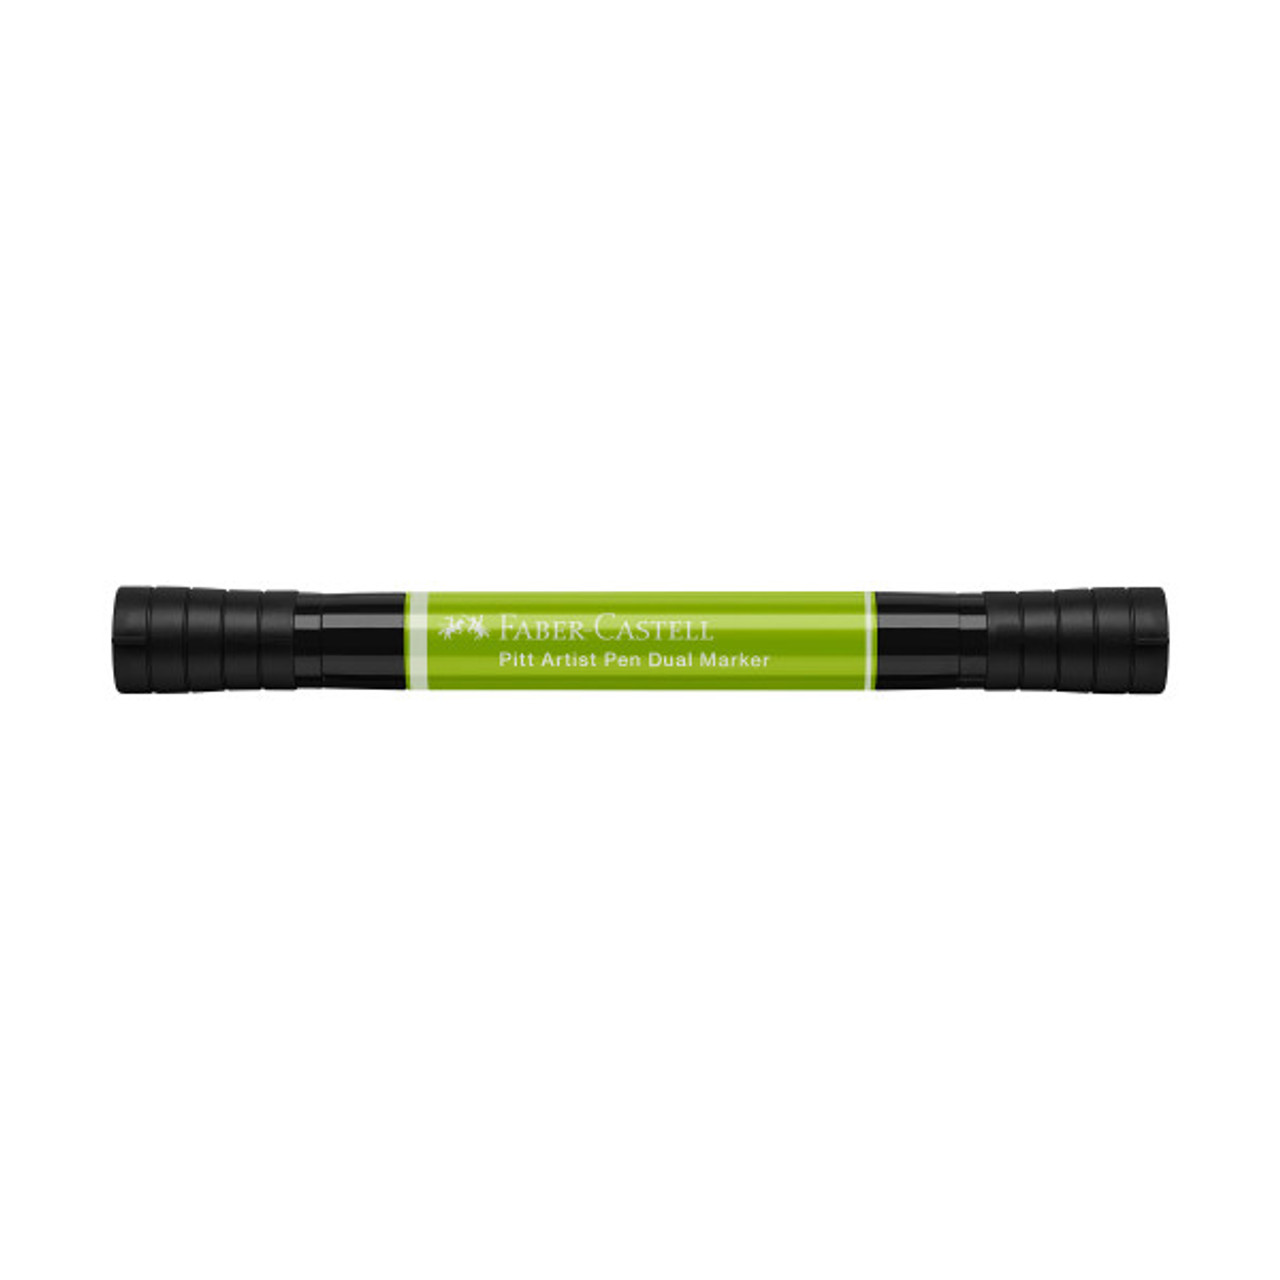 170 May Green - Buy 4, Get 1 Free - Pitt Artist Pen Dual Marker - Faber Castell